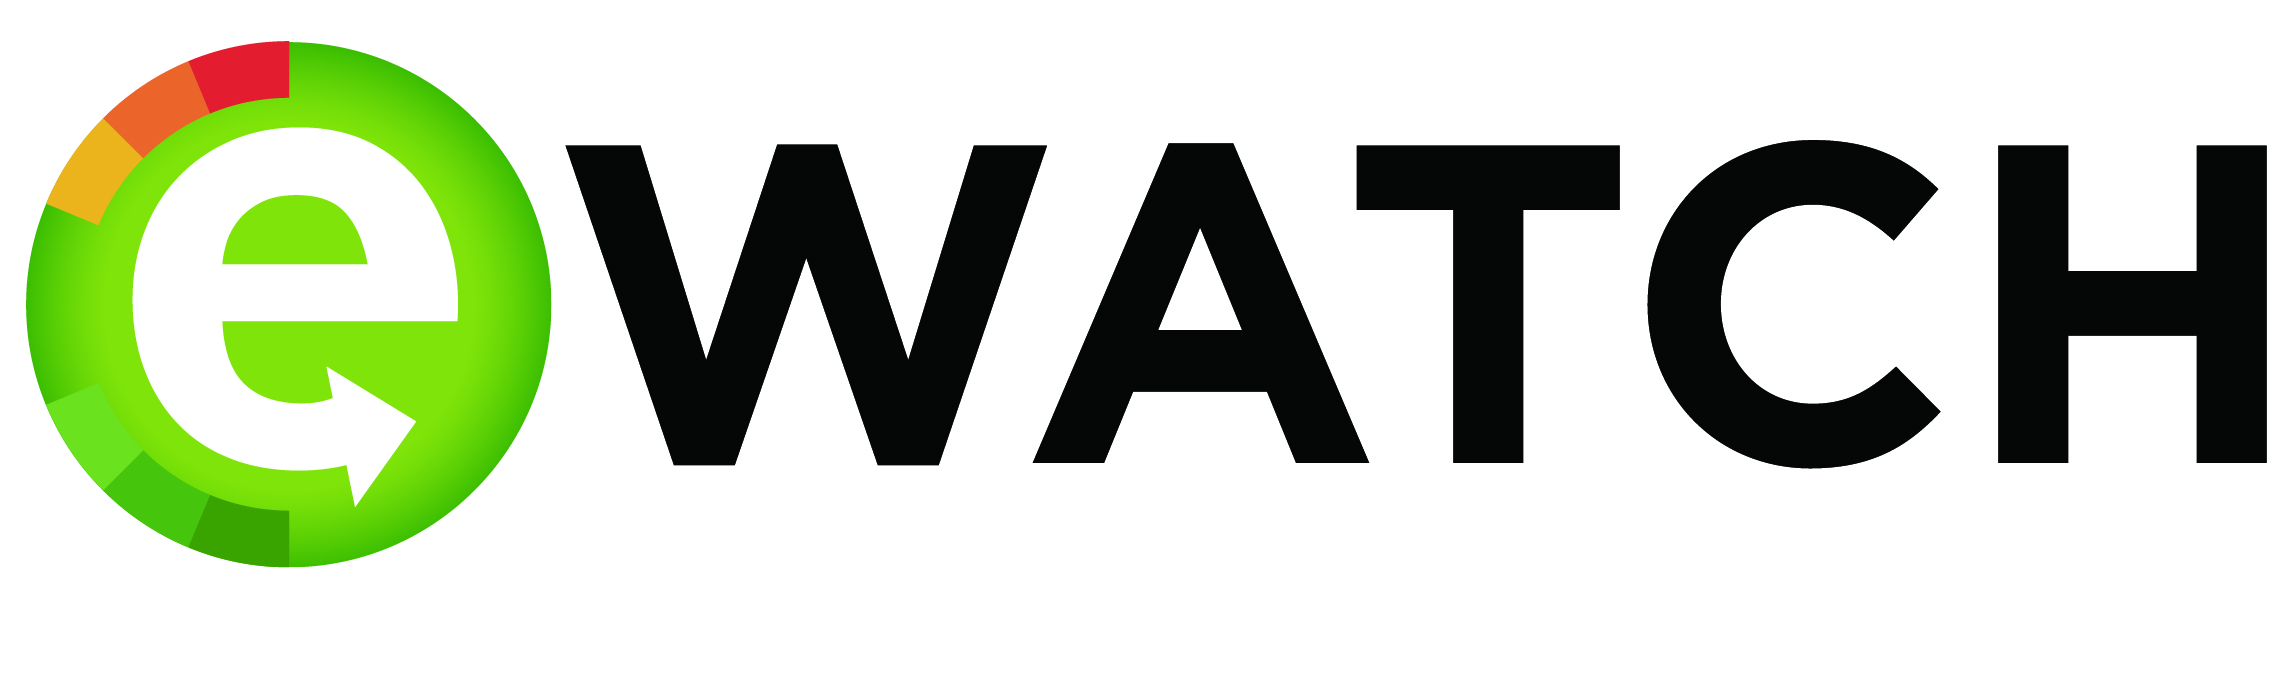 eWATCH是科莱恩全球能效项目，旨在永久优化科莱恩在各个领域的能源使用。
(图片提供：科莱恩)